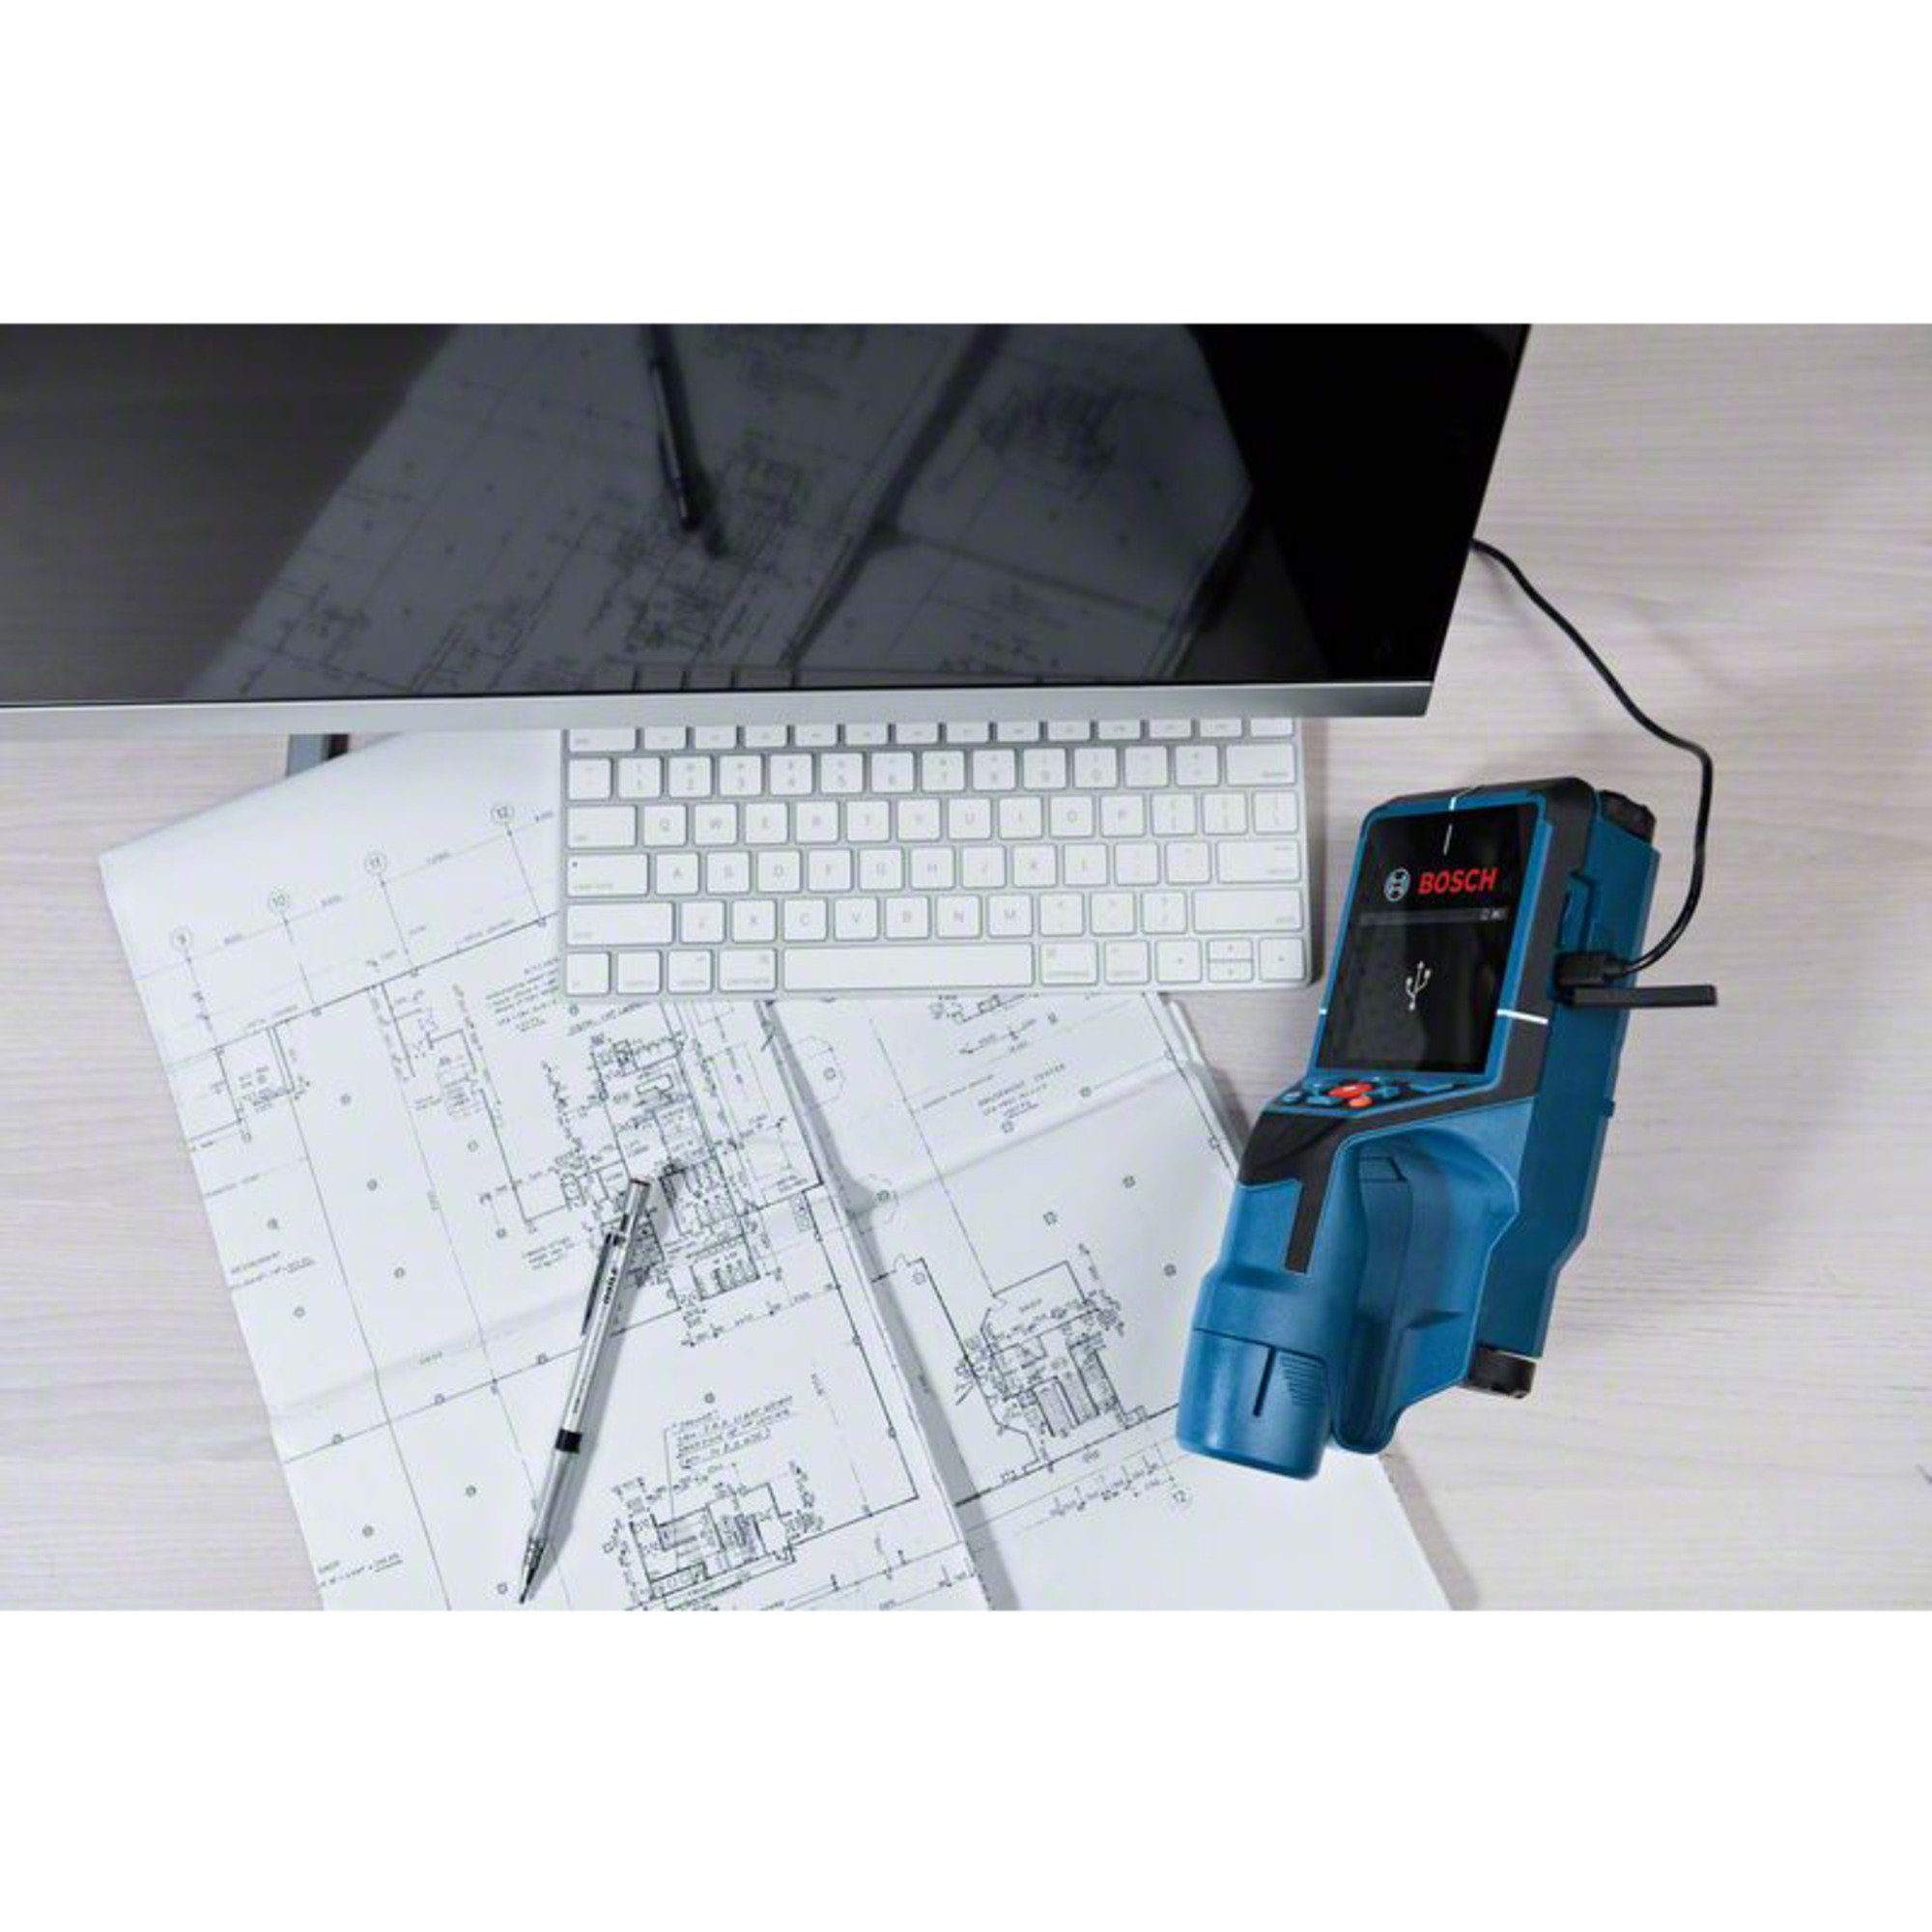 200 Professional Akku-Multifunktionswerkzeug Bosch D-tect C Wallscanner BOSCH